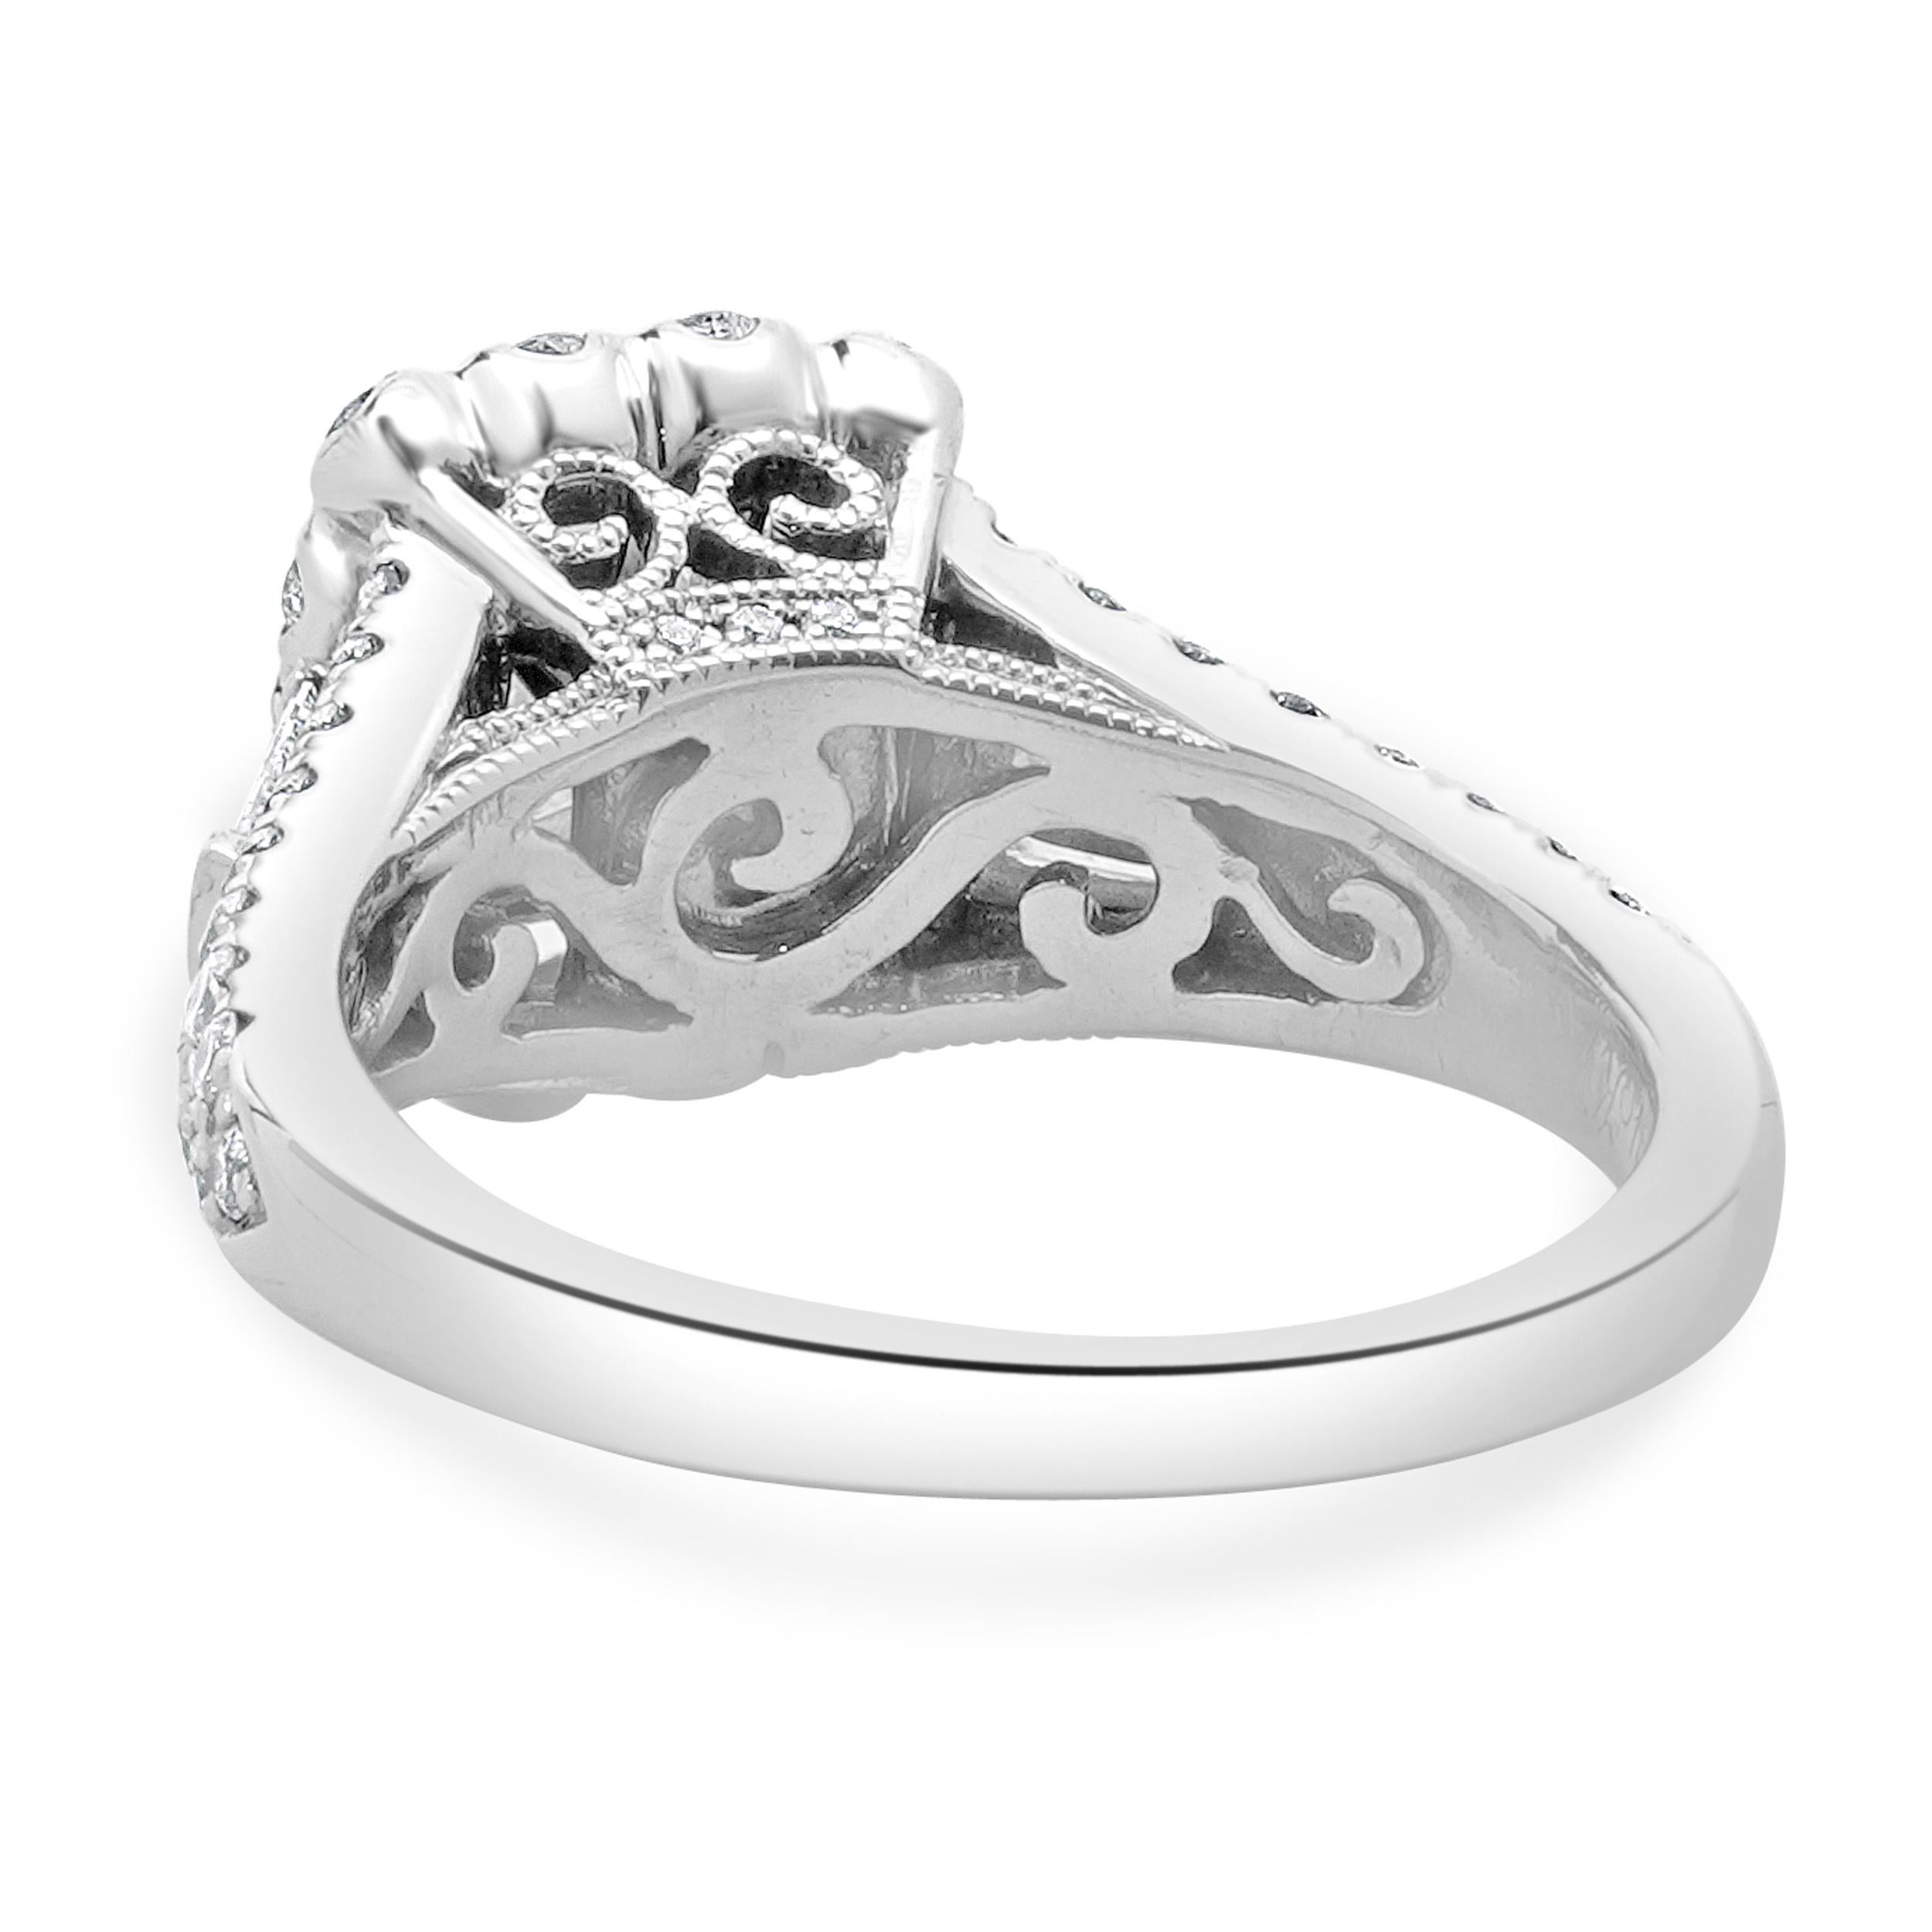 Neil Lane 14 Karat White Gold Emerald Cut Diamond Engagement Ring In Excellent Condition For Sale In Scottsdale, AZ